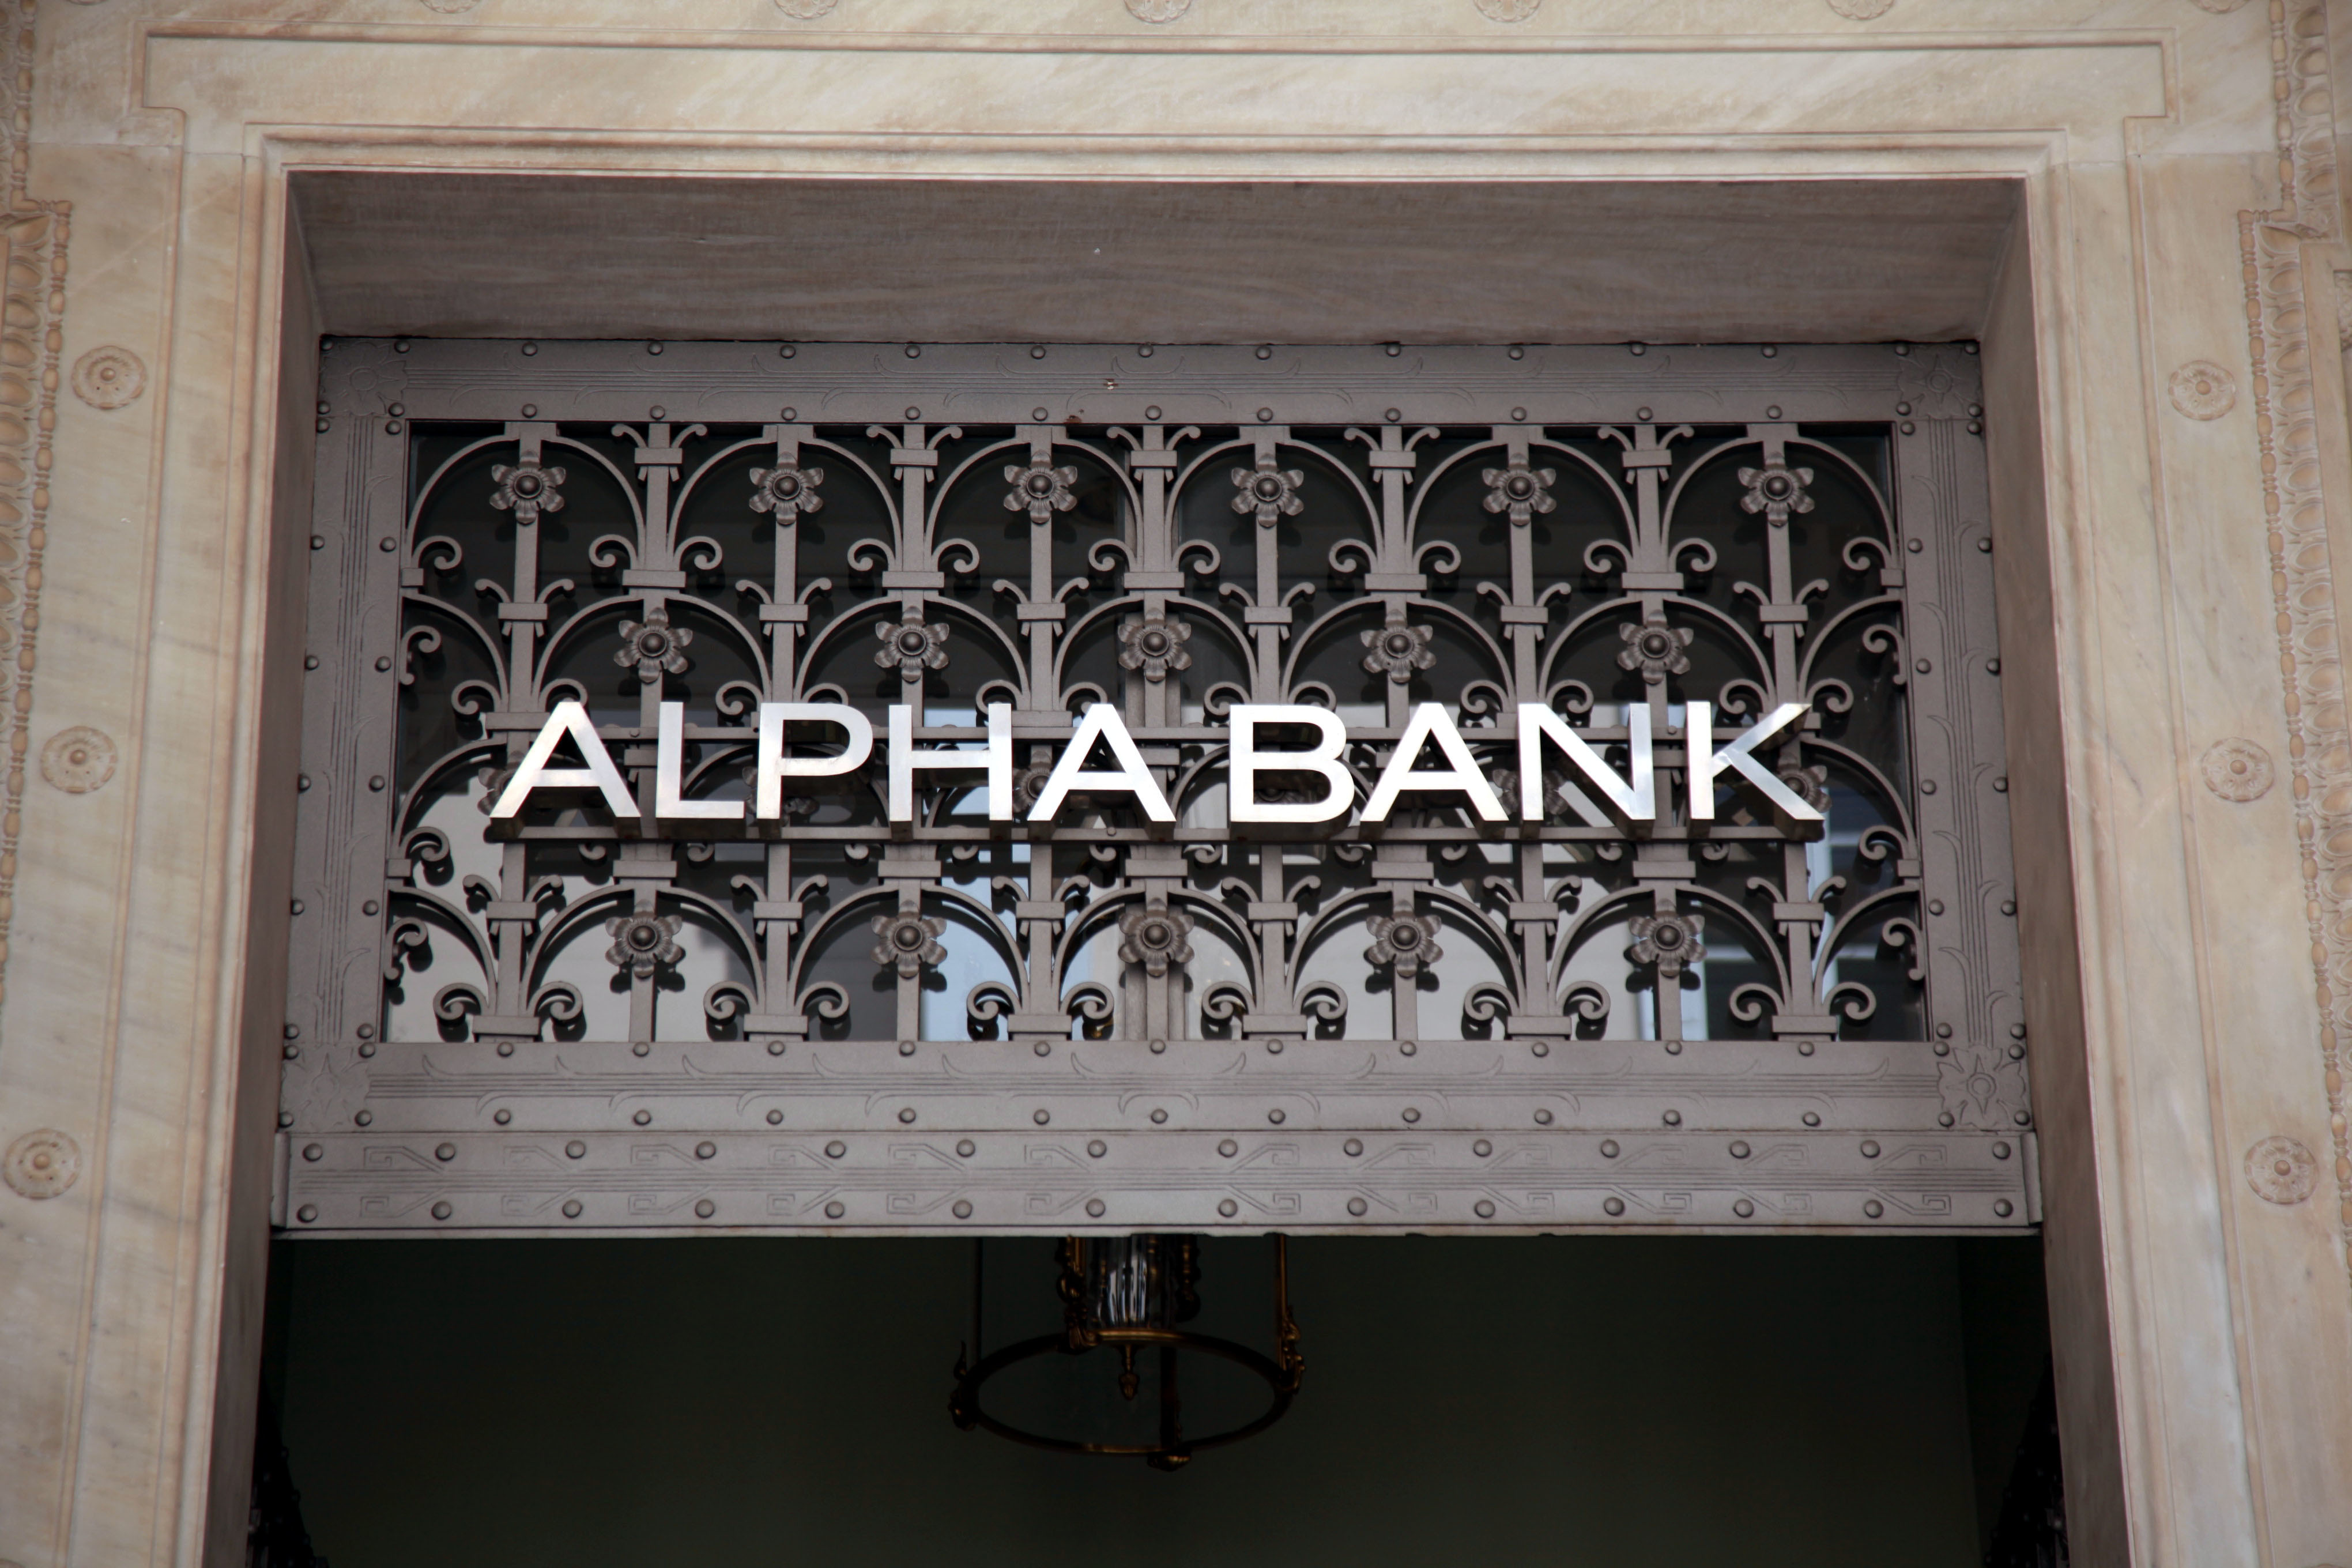 Alpha Bank: “Τελευταία χρονιά μείωσης των εισοδημάτων” το 2013